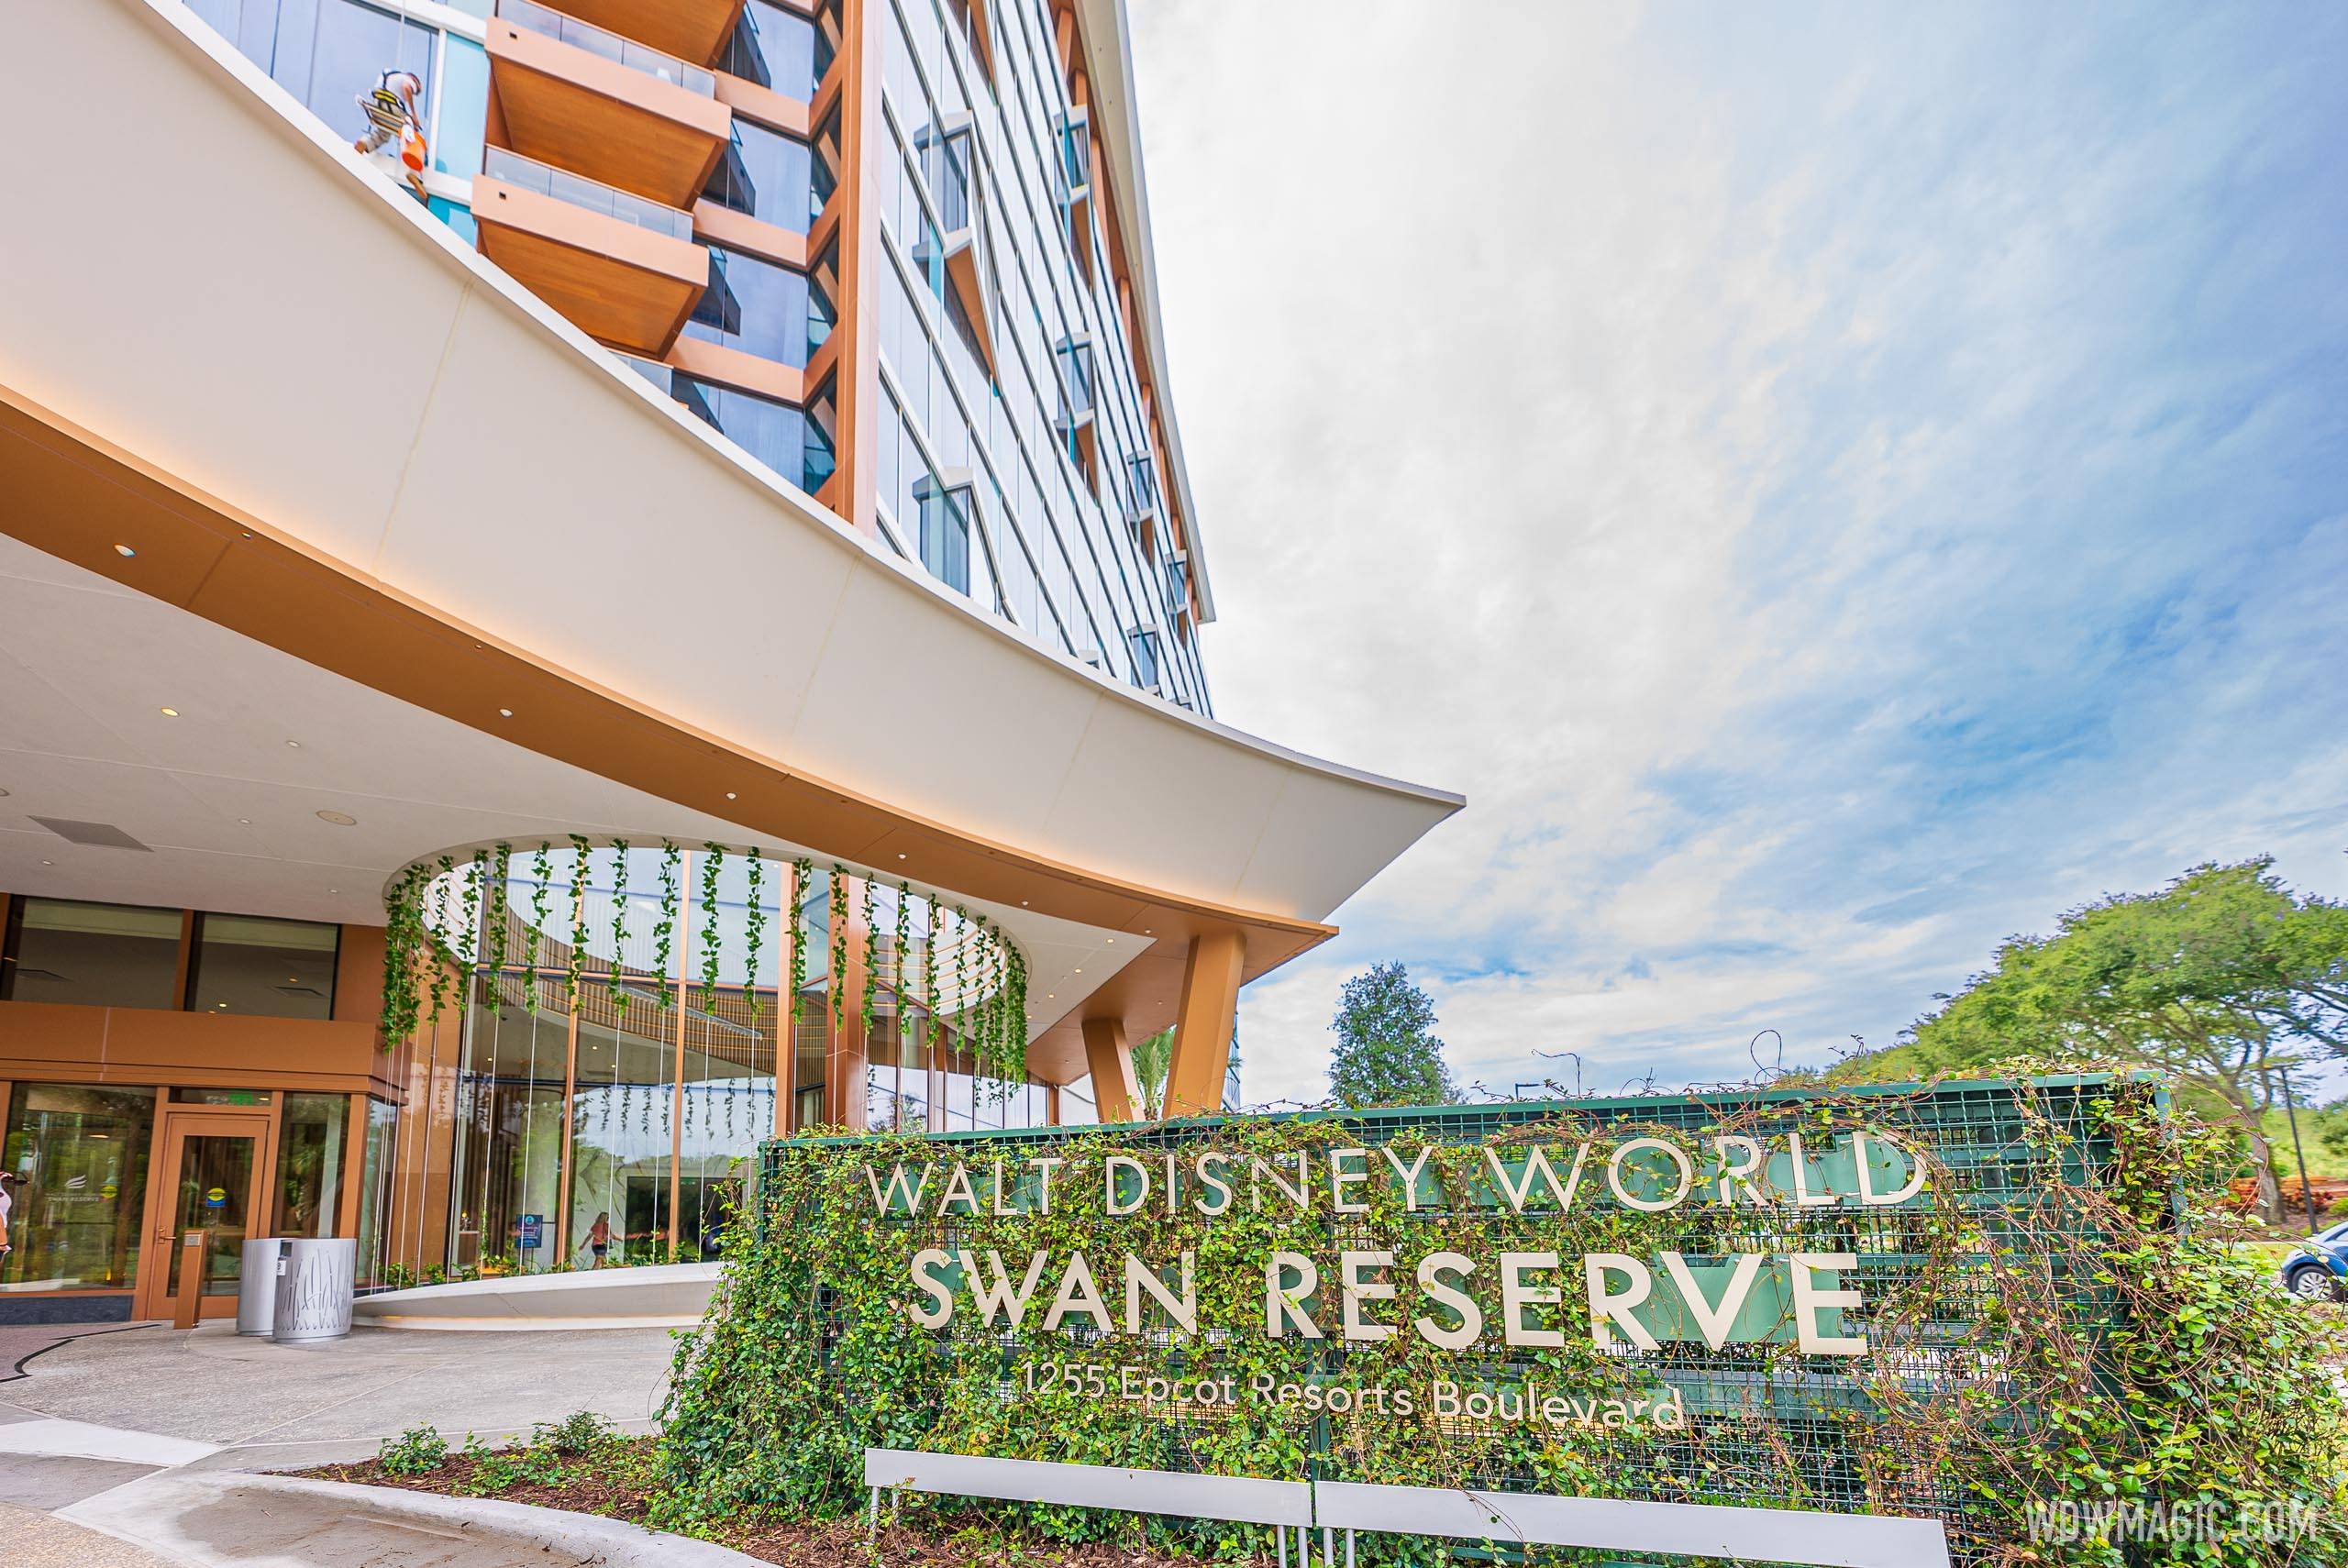 Walt Disney World Swan Reserve